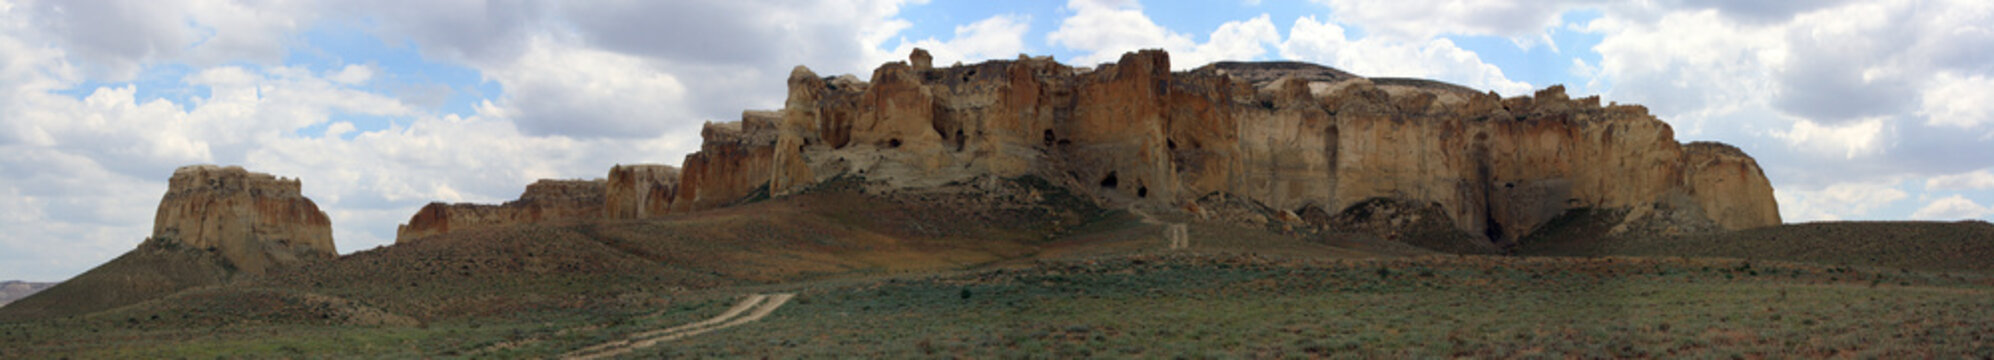 Western Kazakhstan. Ustyurt plateau. Mount Sherkala from the north.